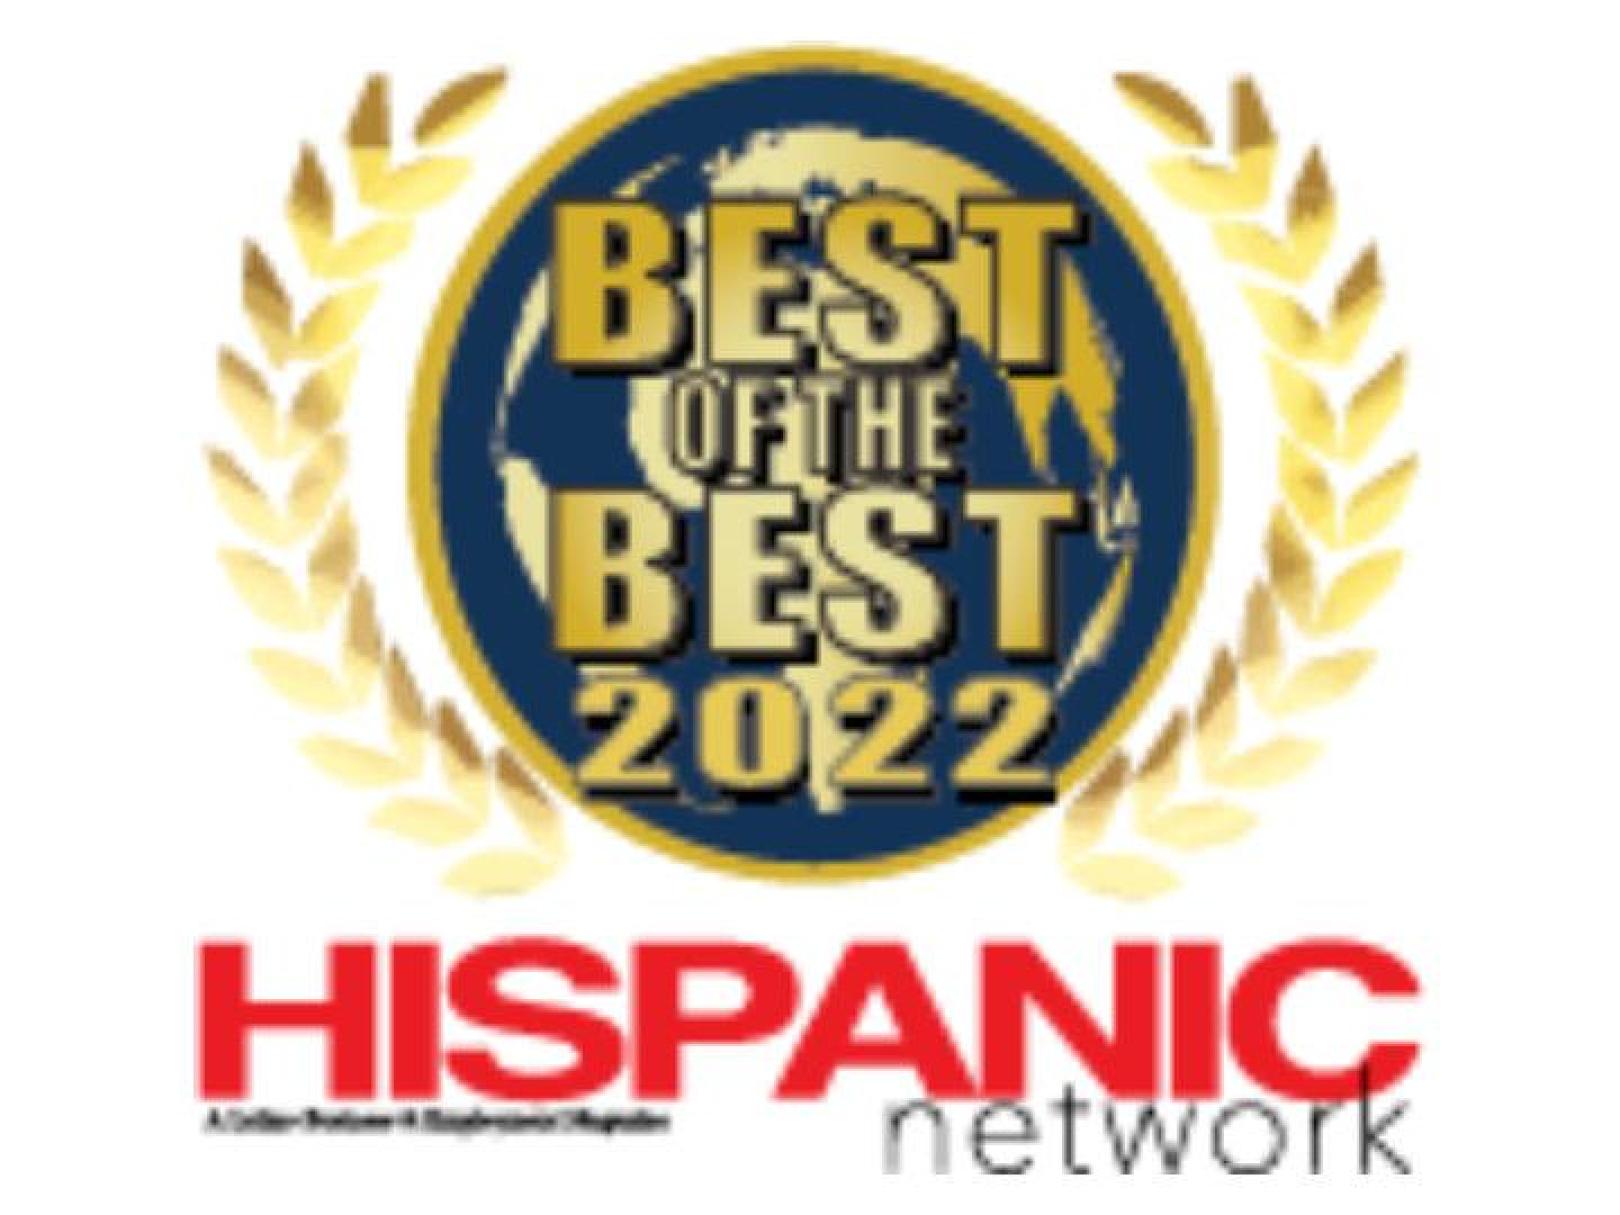 Hispanic Network Magazine 2022 Best of the Best